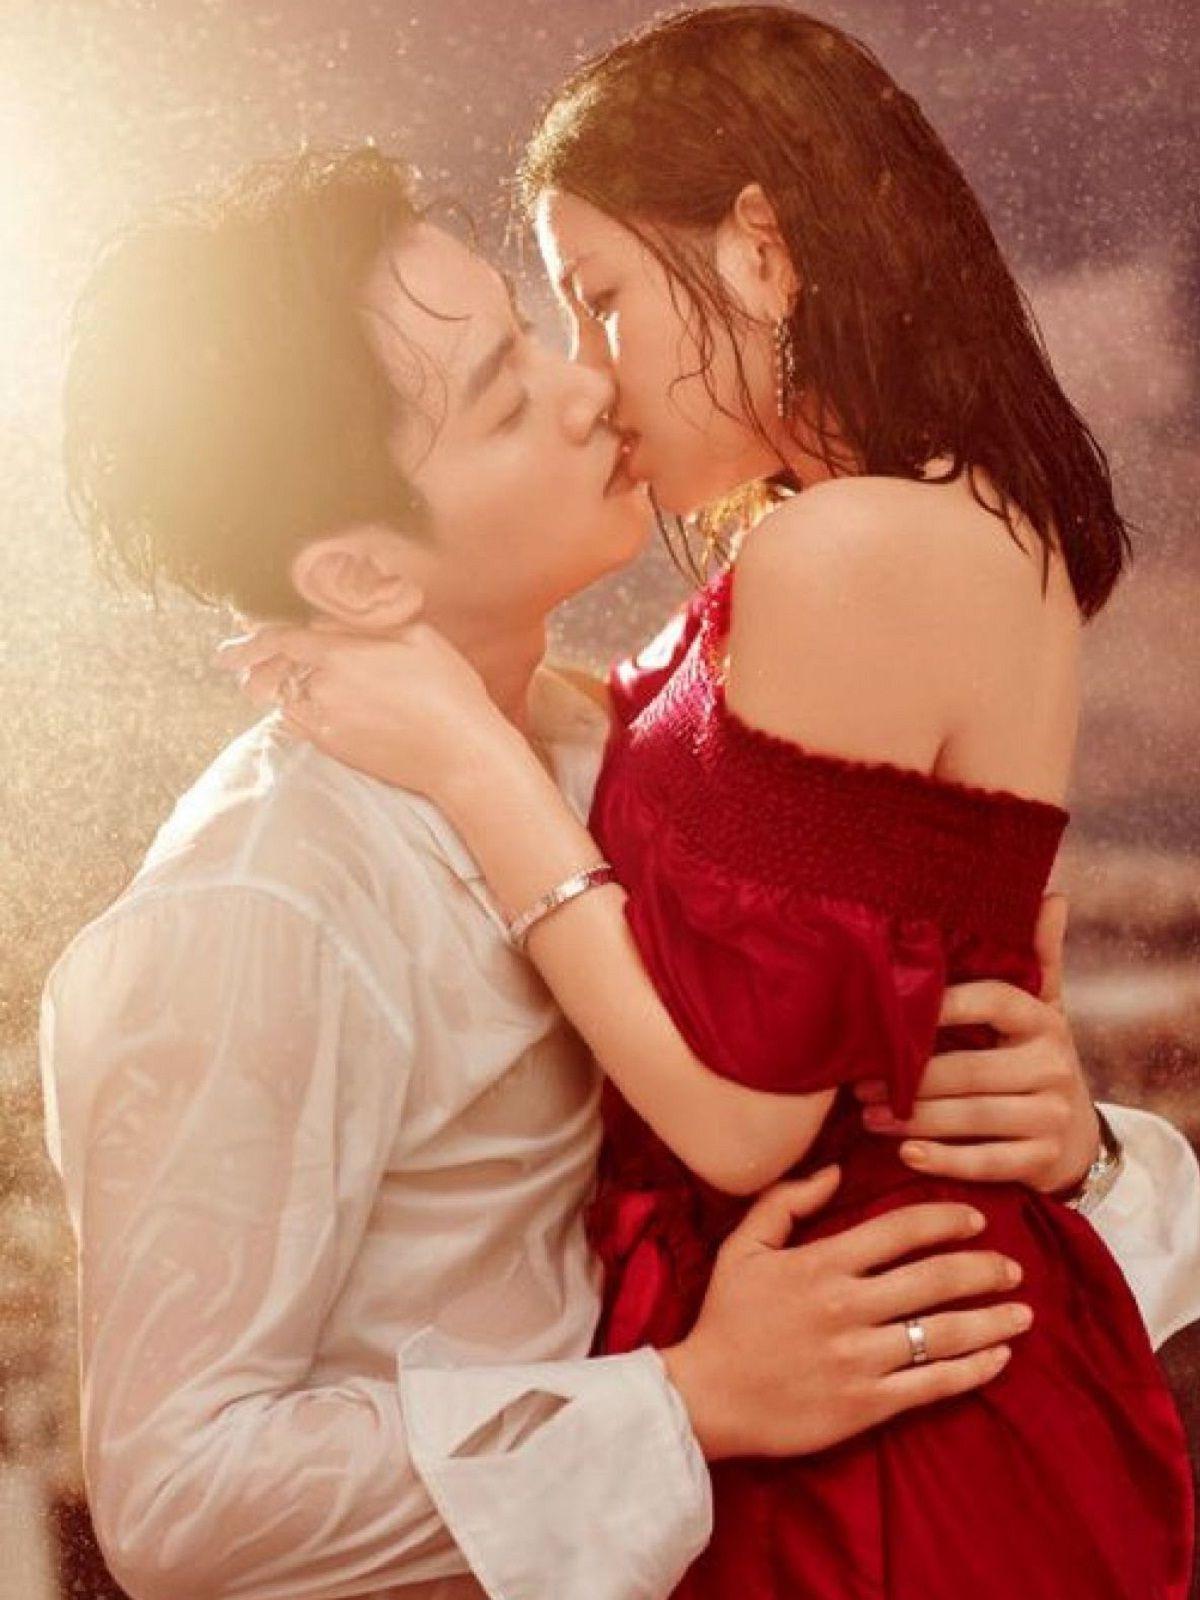 Lips kissing couple and love time hug wallpaper. HD Wallpaper Rocks